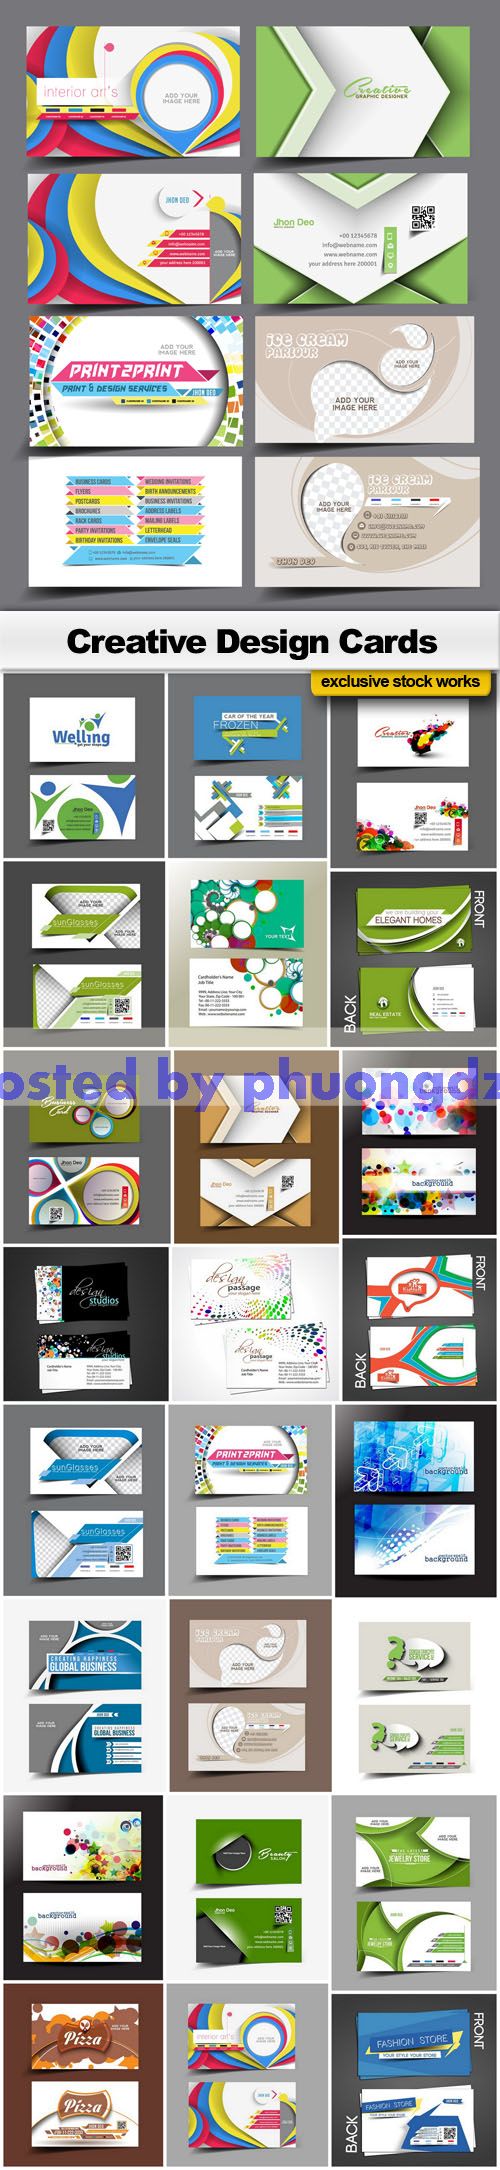 Creative Design Cards Collection 4